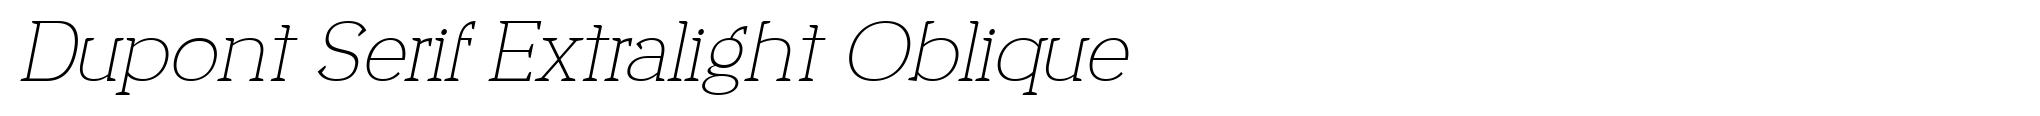 Dupont Serif Extralight Oblique image